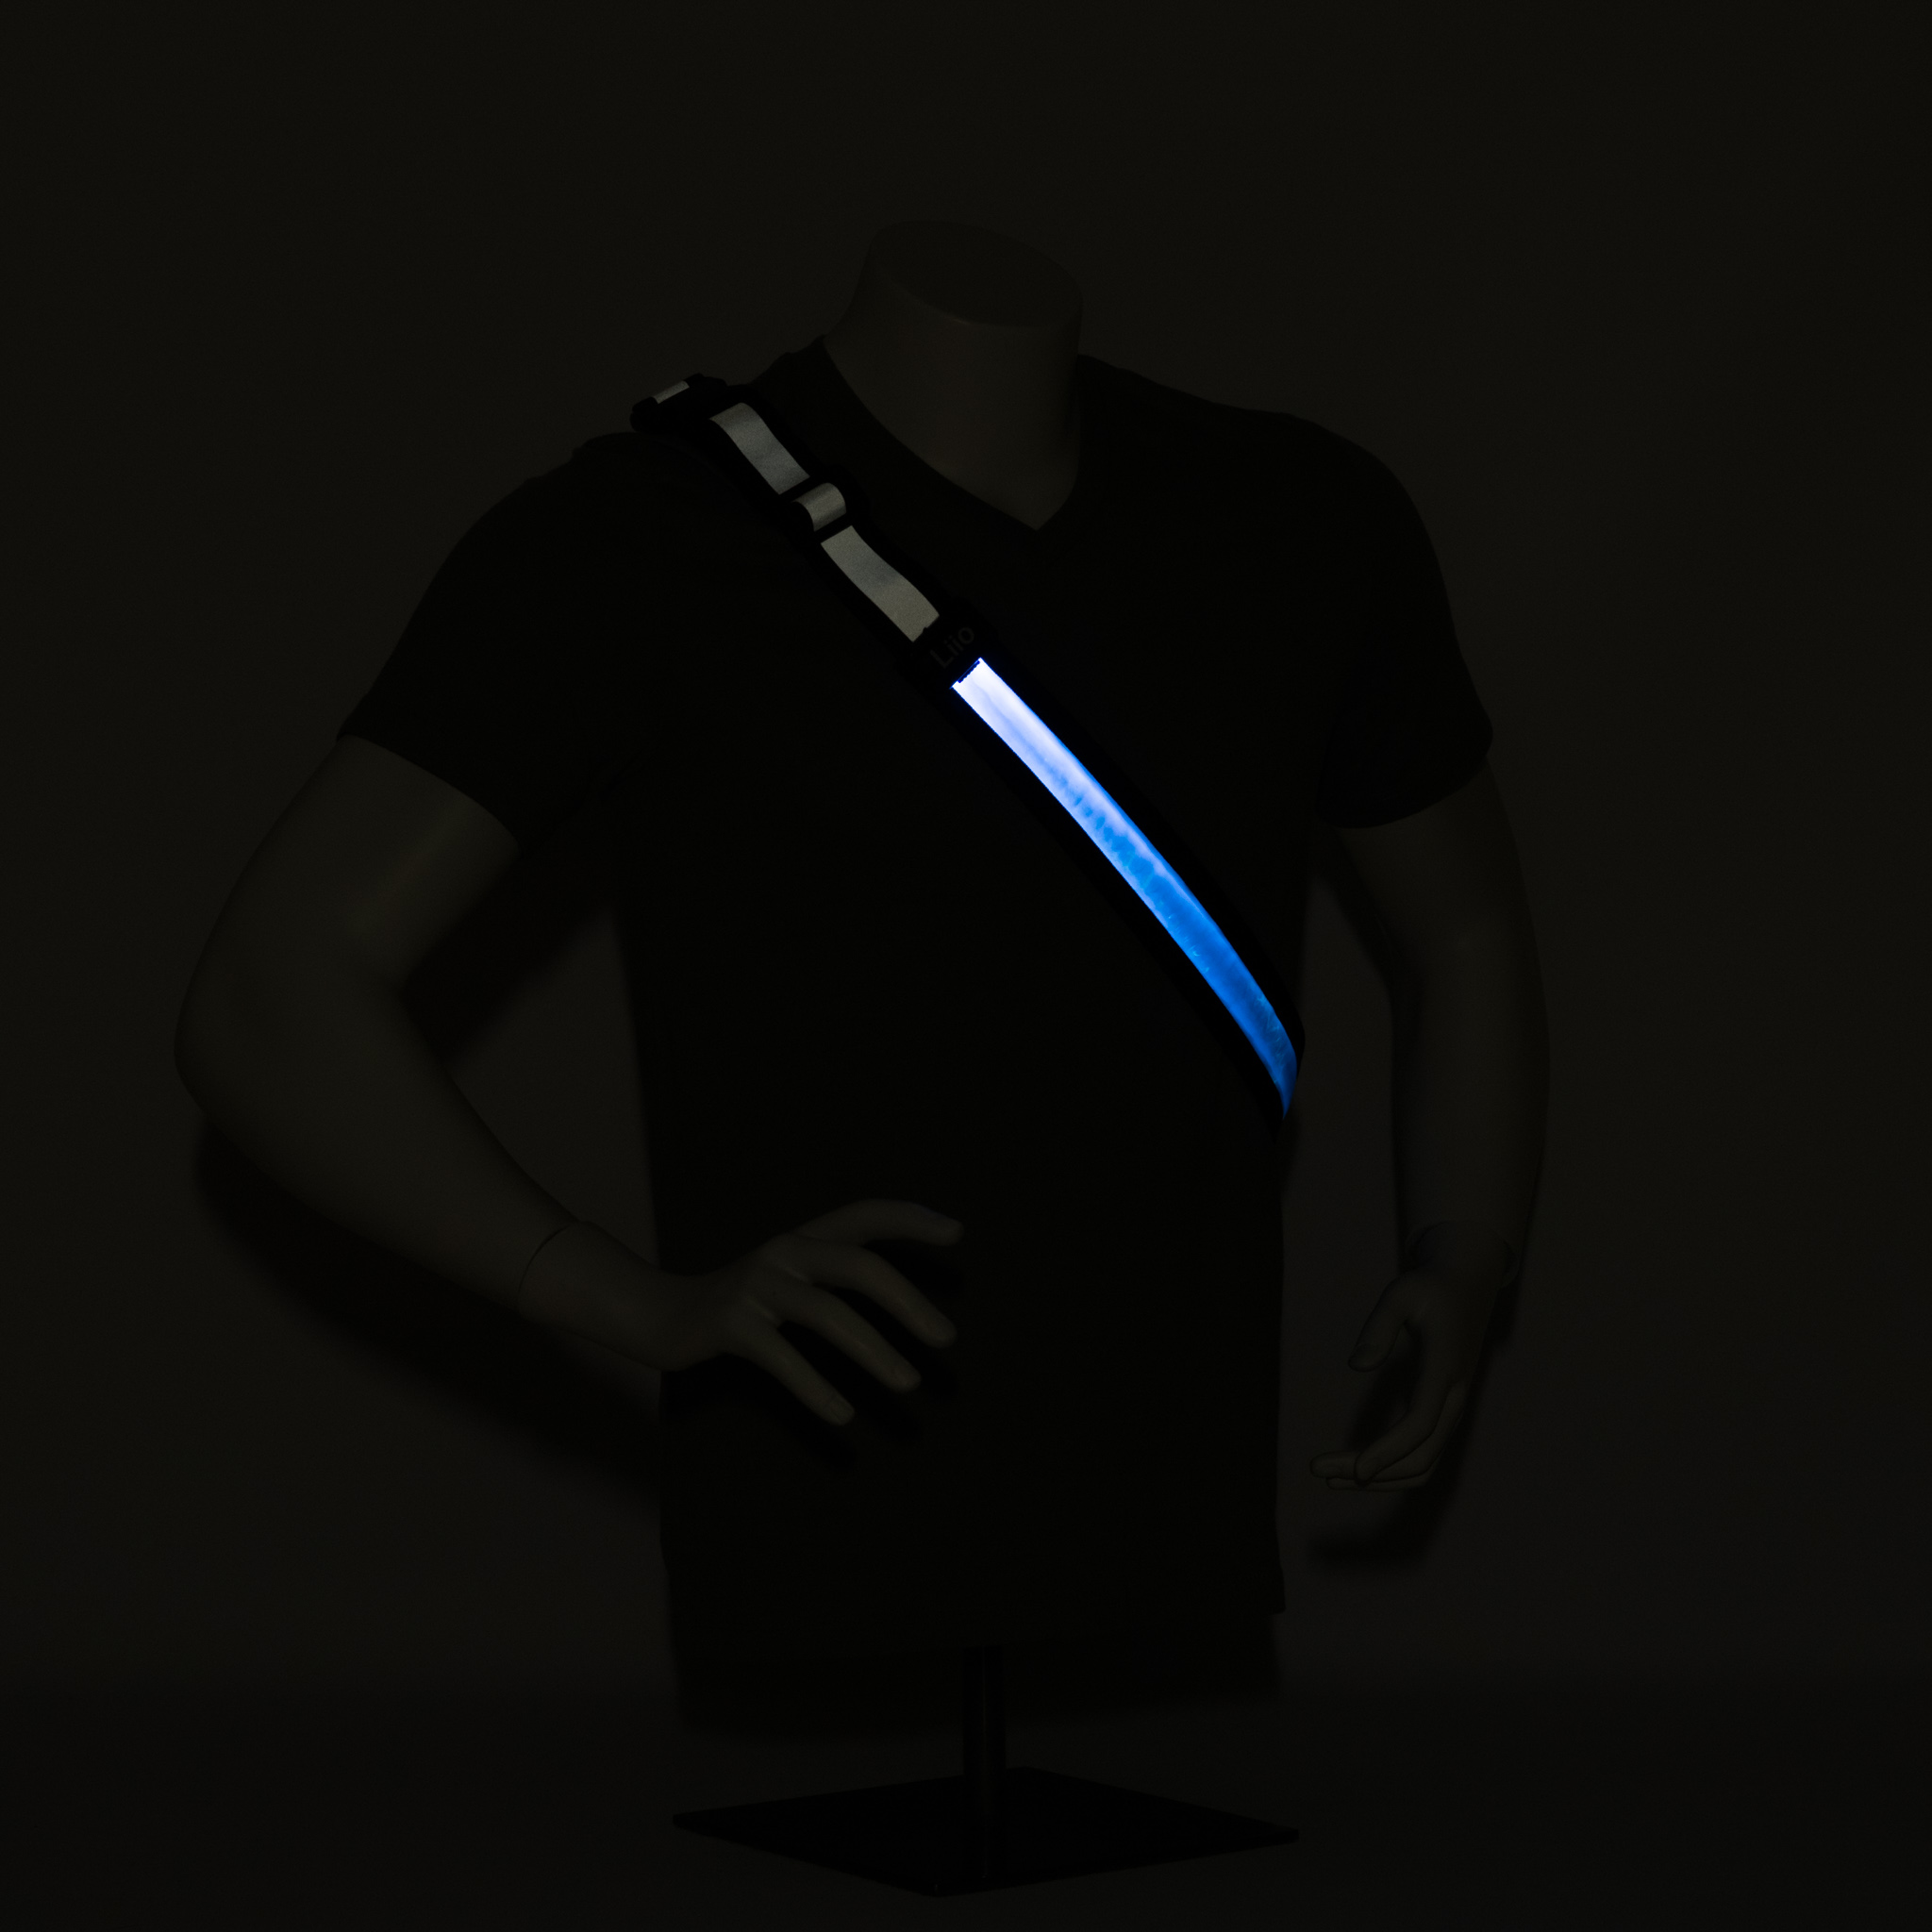 Liio Luxe Blue: LED USB rechargeable illuminating reflective modular ...